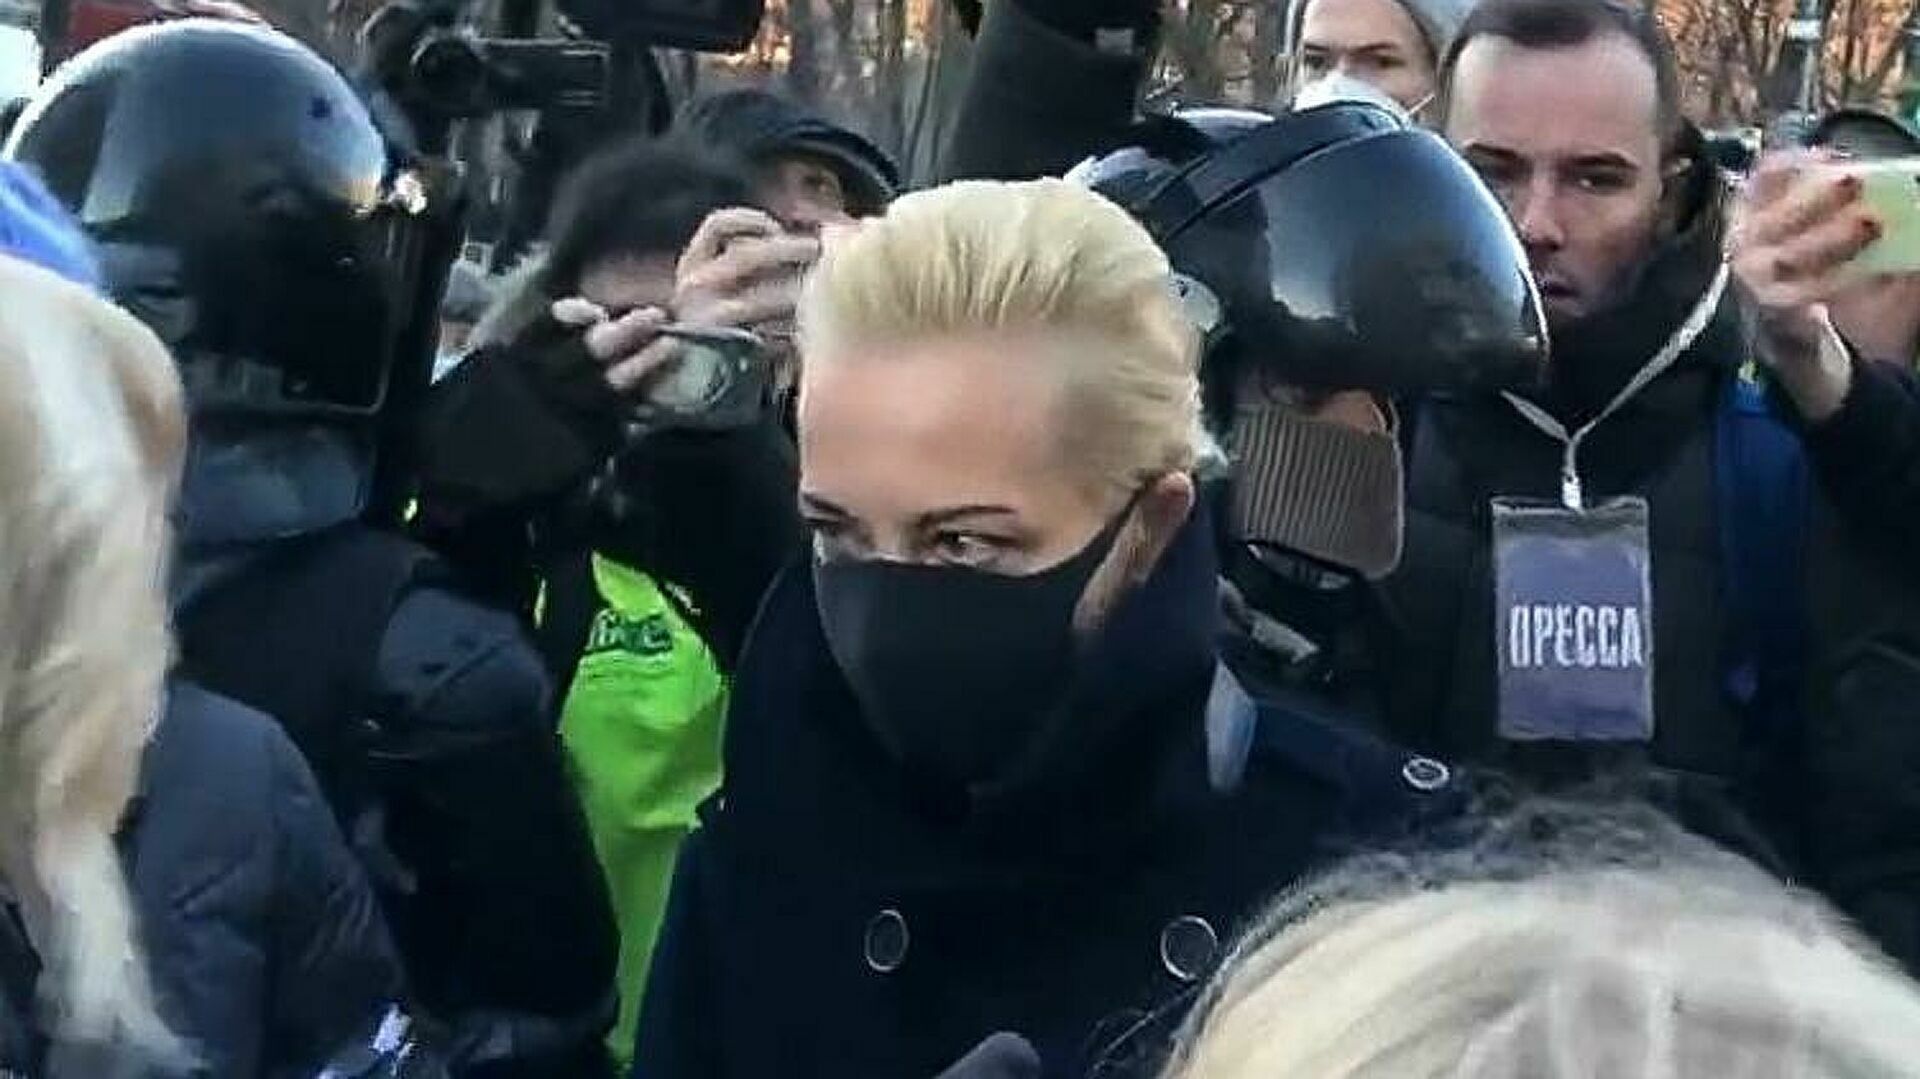 Юлия Навальная